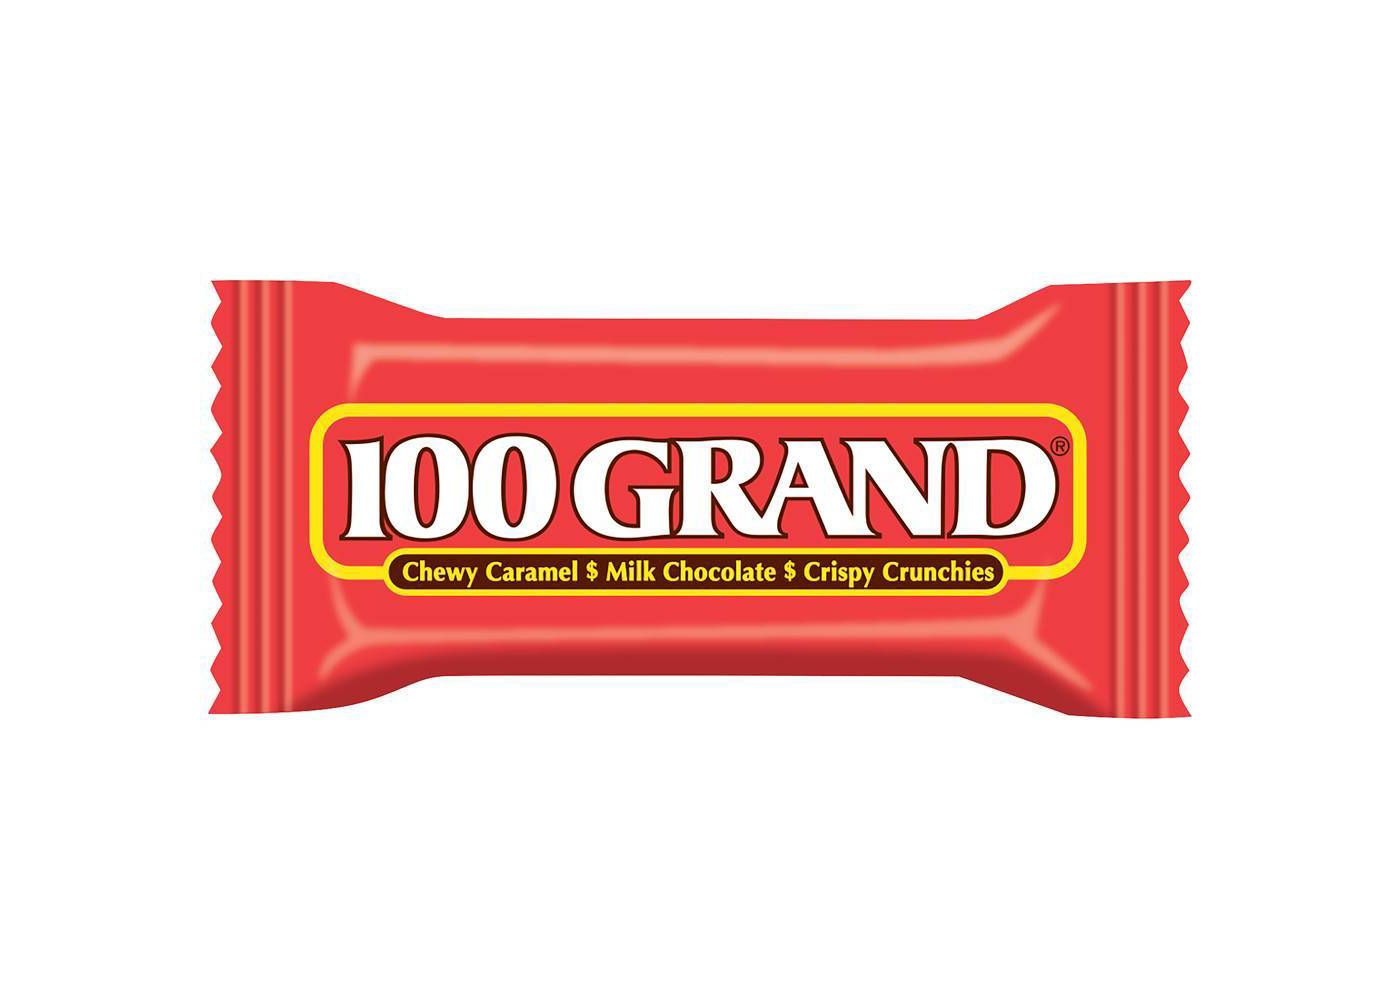 100 Grand Fun Size Chocolate Candy Bars, 10oz